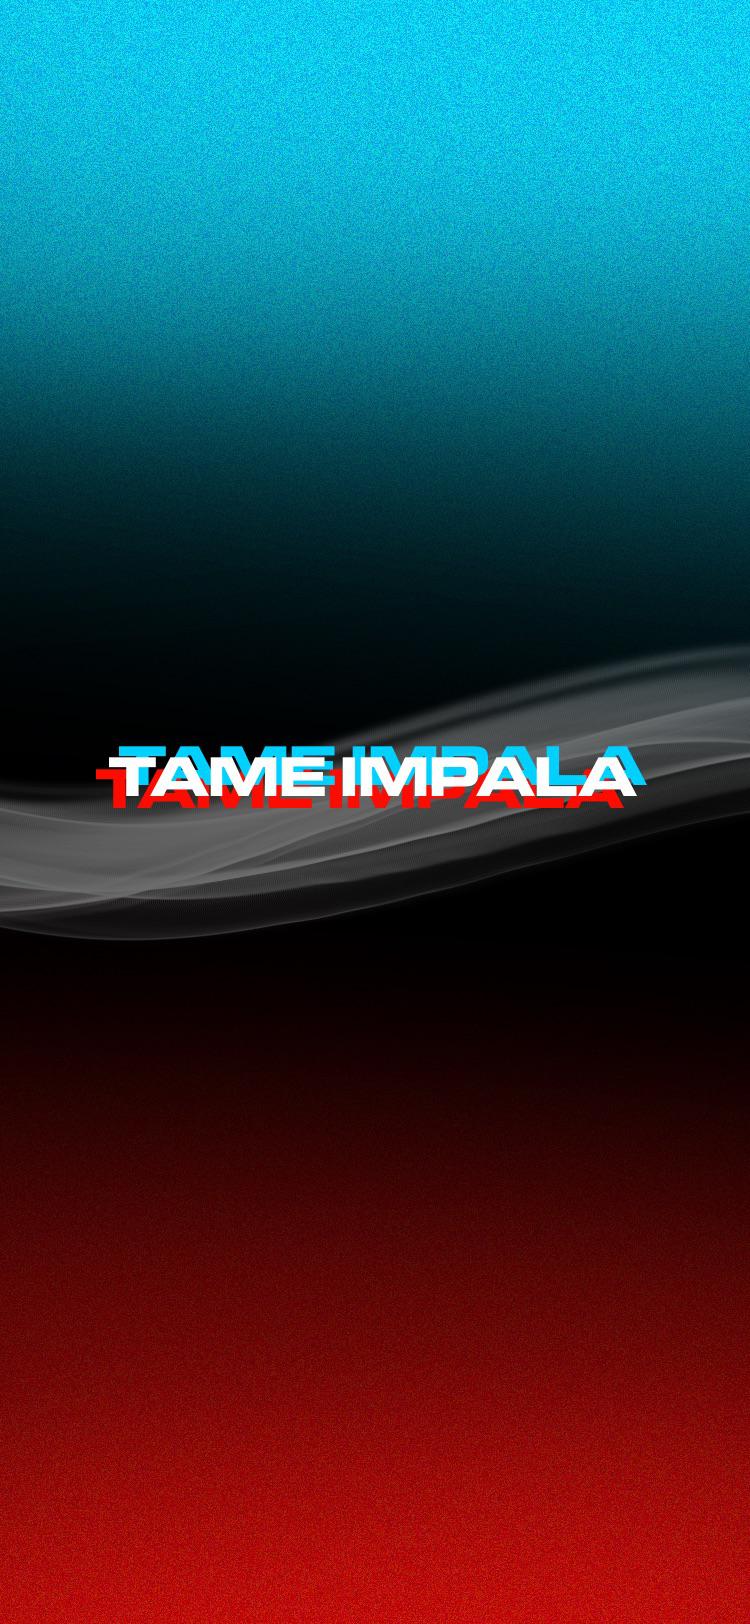 Tame Impala iPhone X wallpaper I made